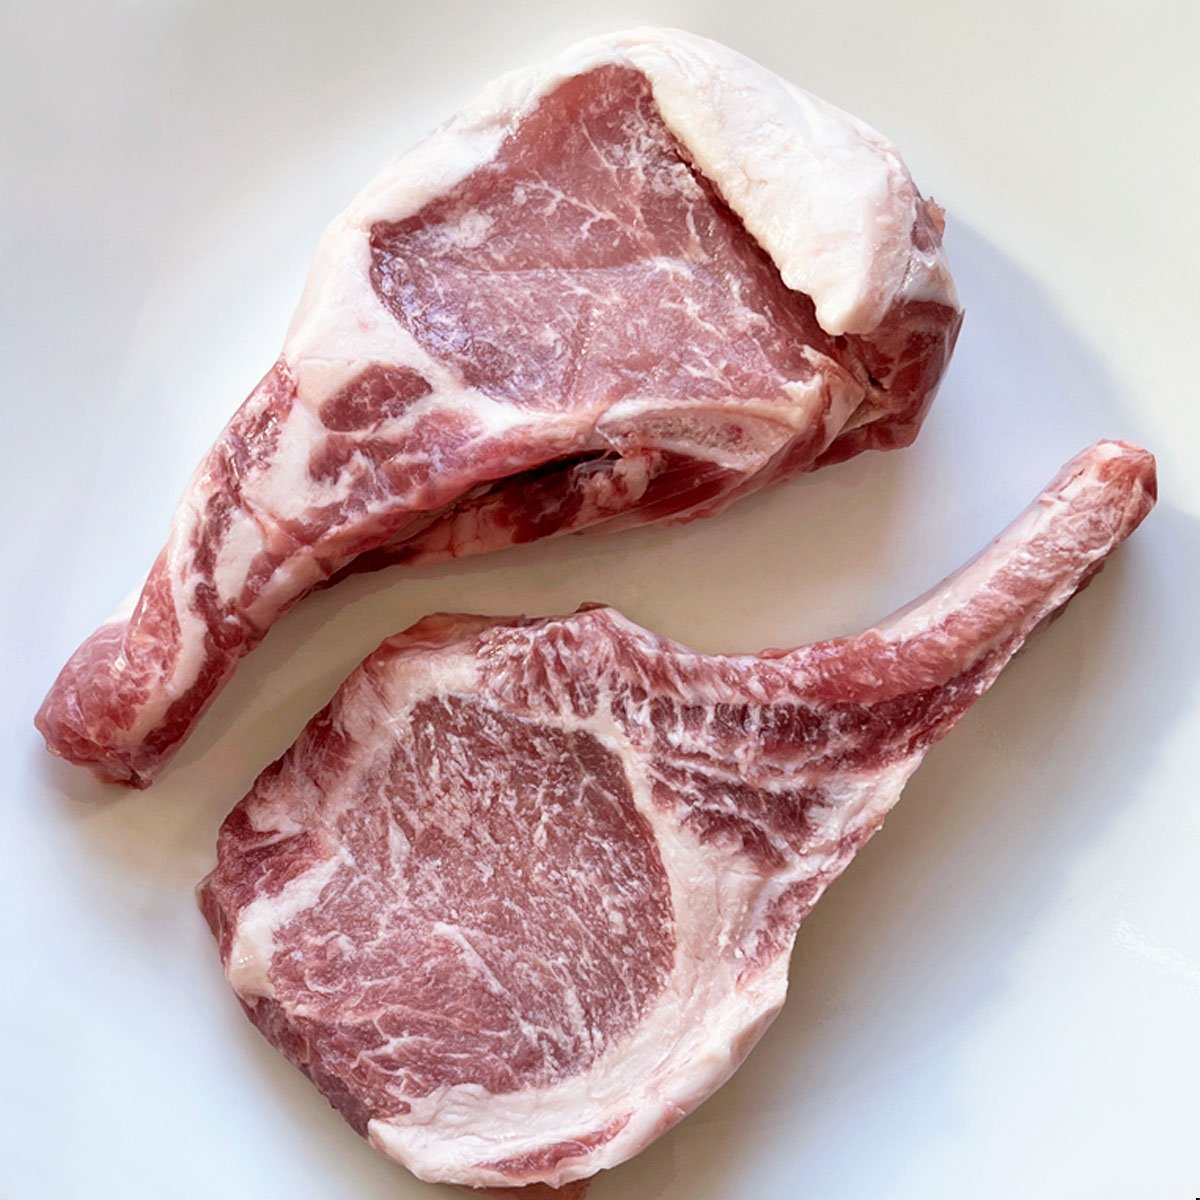 Raw bone-in pork chops. 